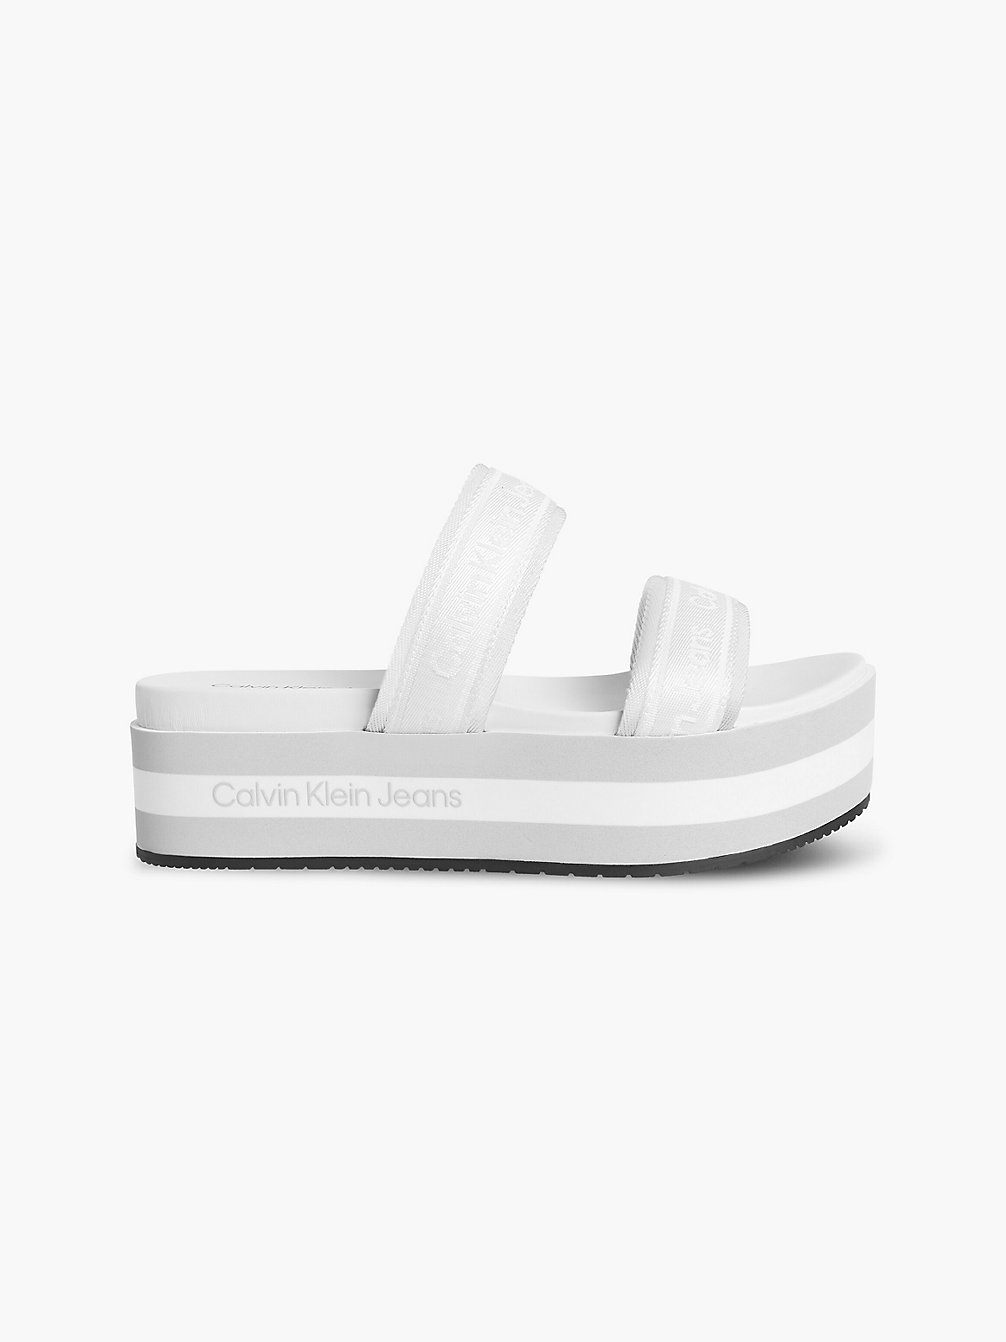 BRIGHT WHITE Sandales À Plateforme Recyclées undefined femmes Calvin Klein